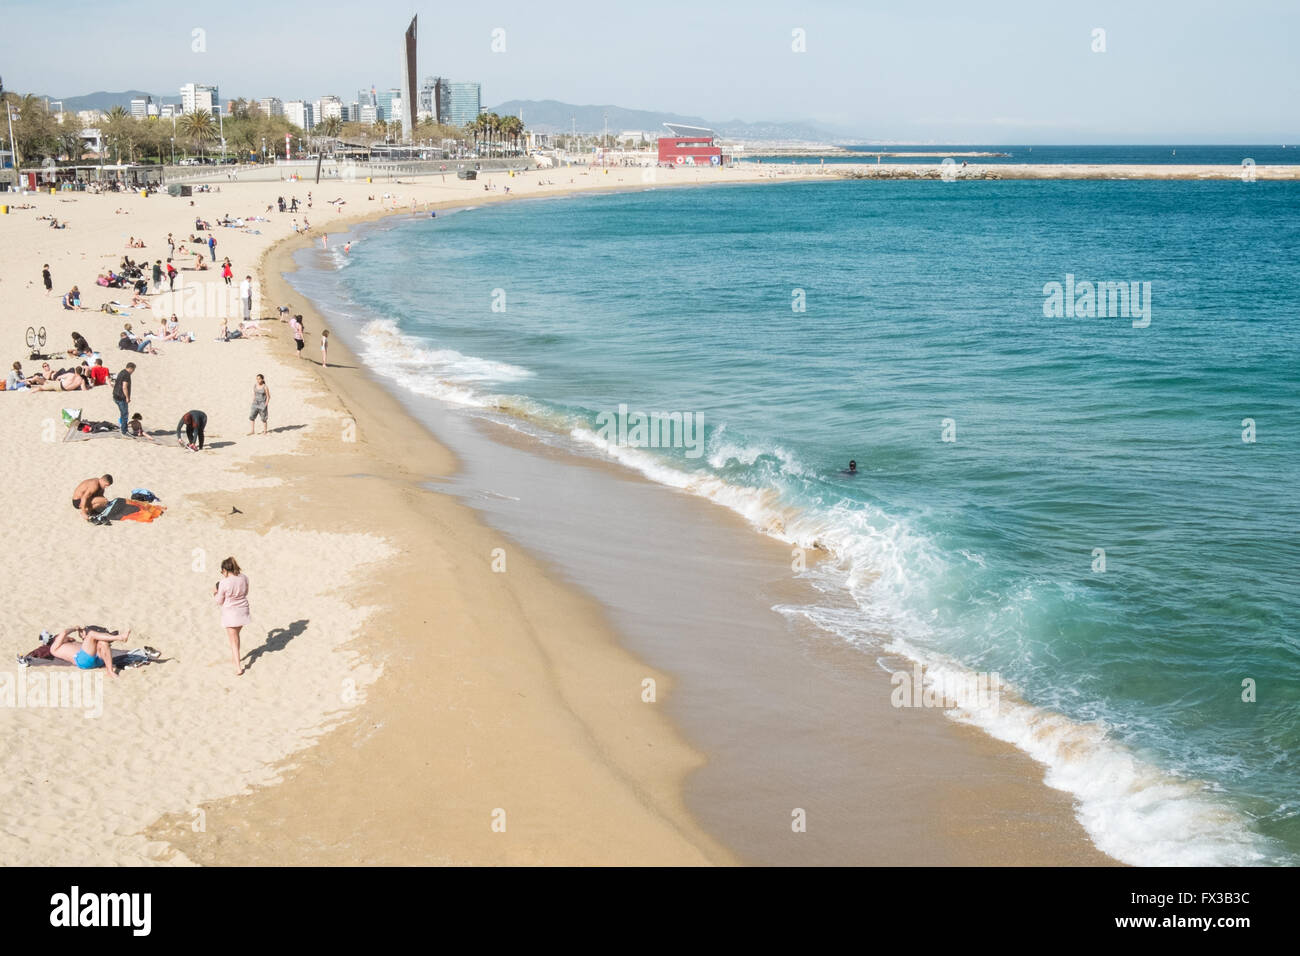 Nova icária beach hi-res stock photography and images - Alamy